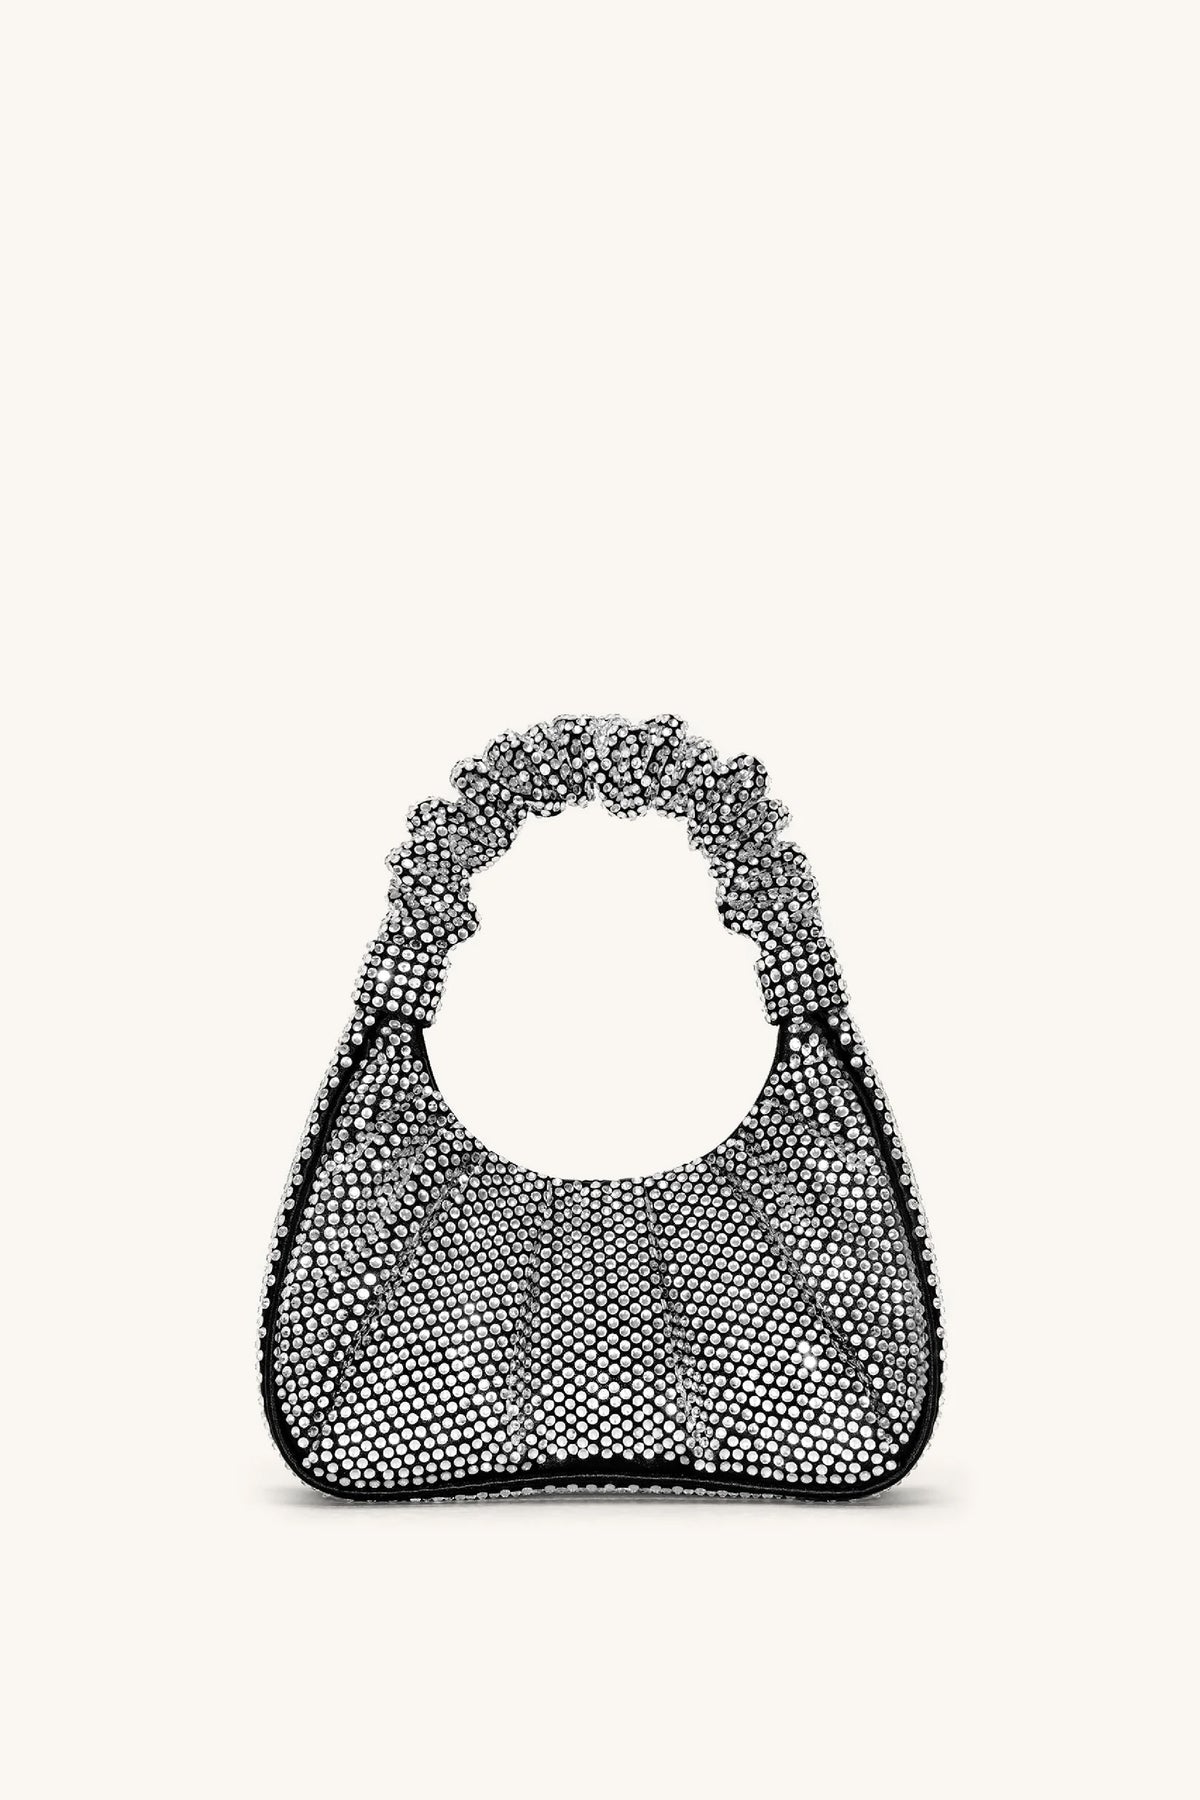 JW PEI Eva artifical crystal medium ruched hobo handbag black